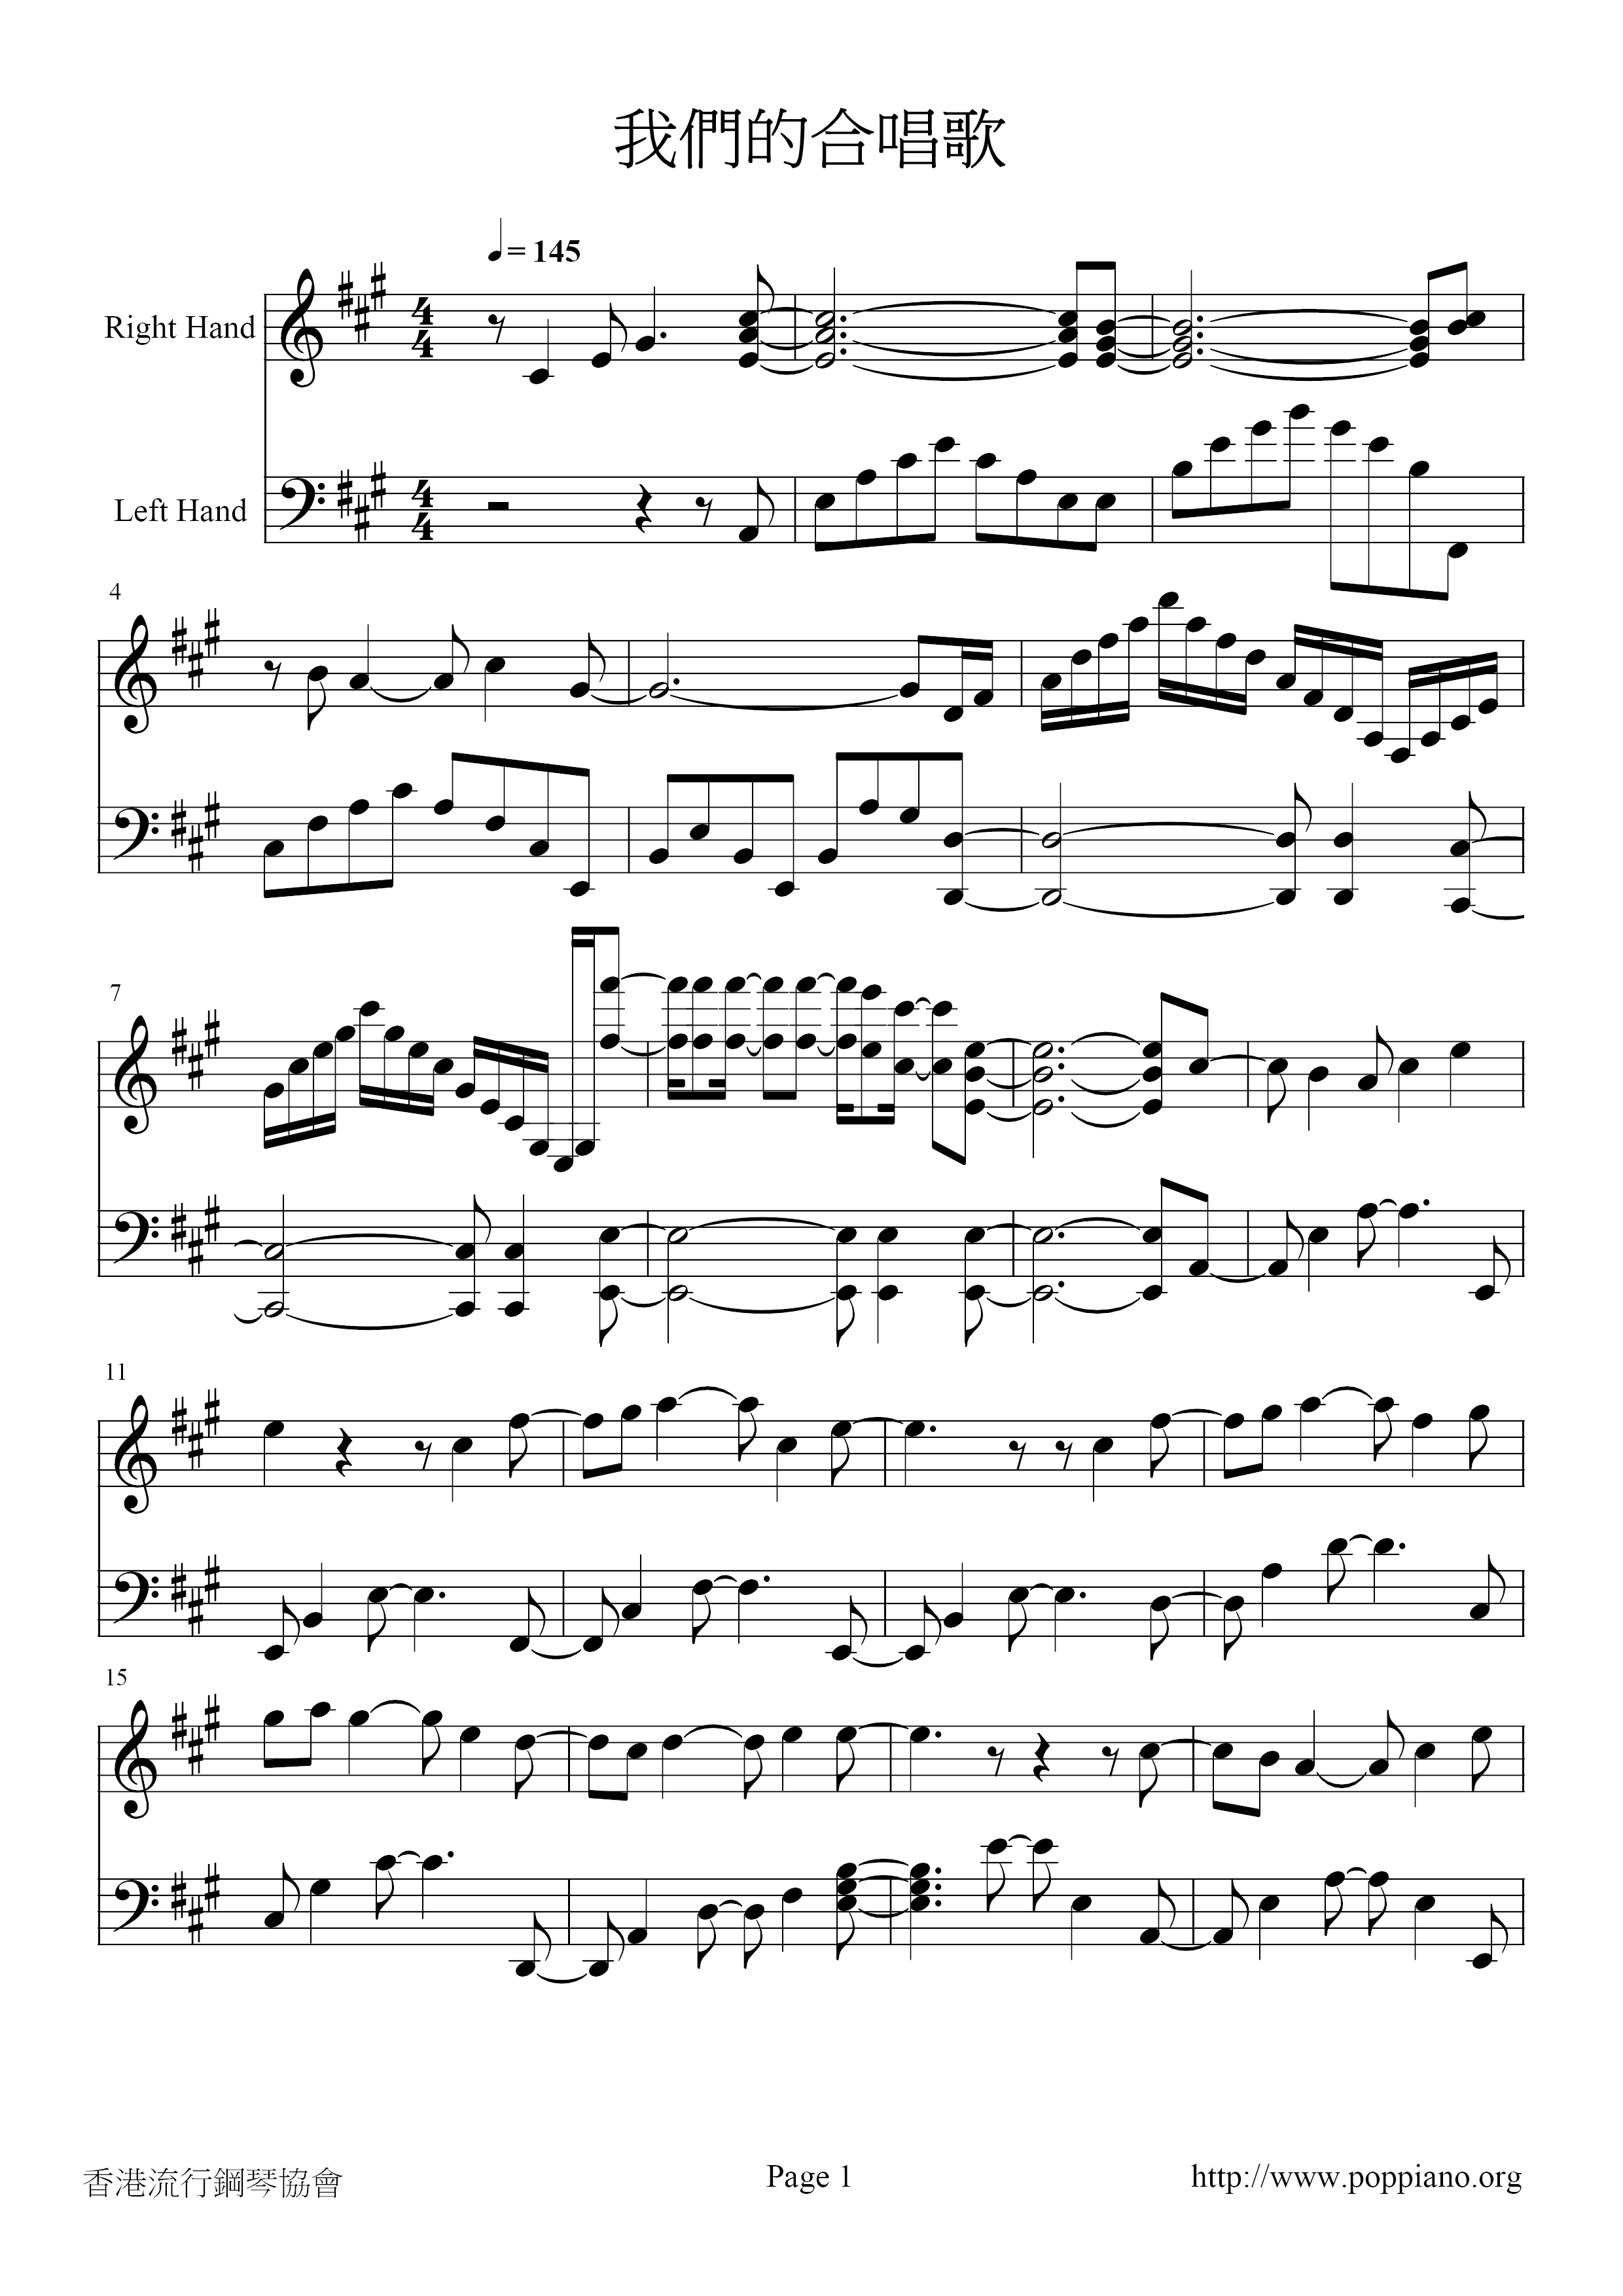 Our Chorus Score